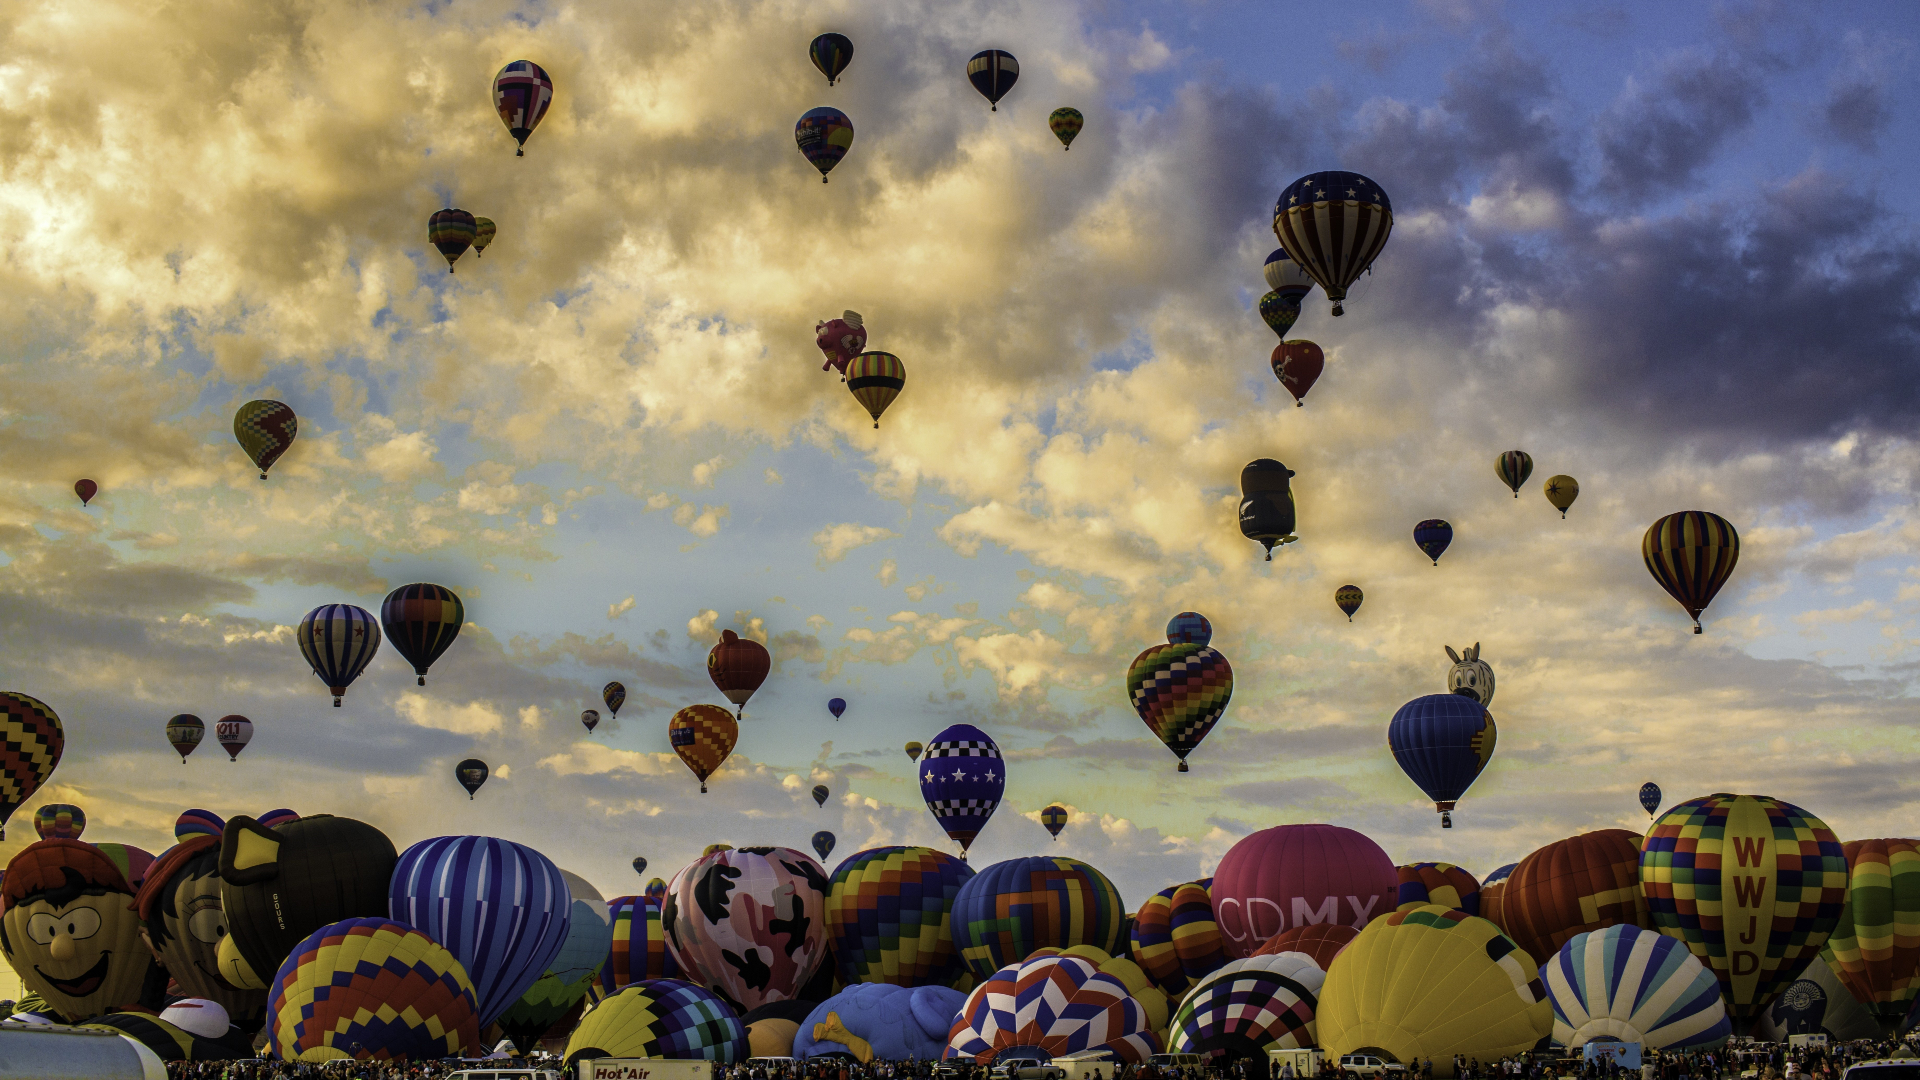 Albuquerque International Balloon Festival with hundreds of hot air balloons shooting up into the sky.